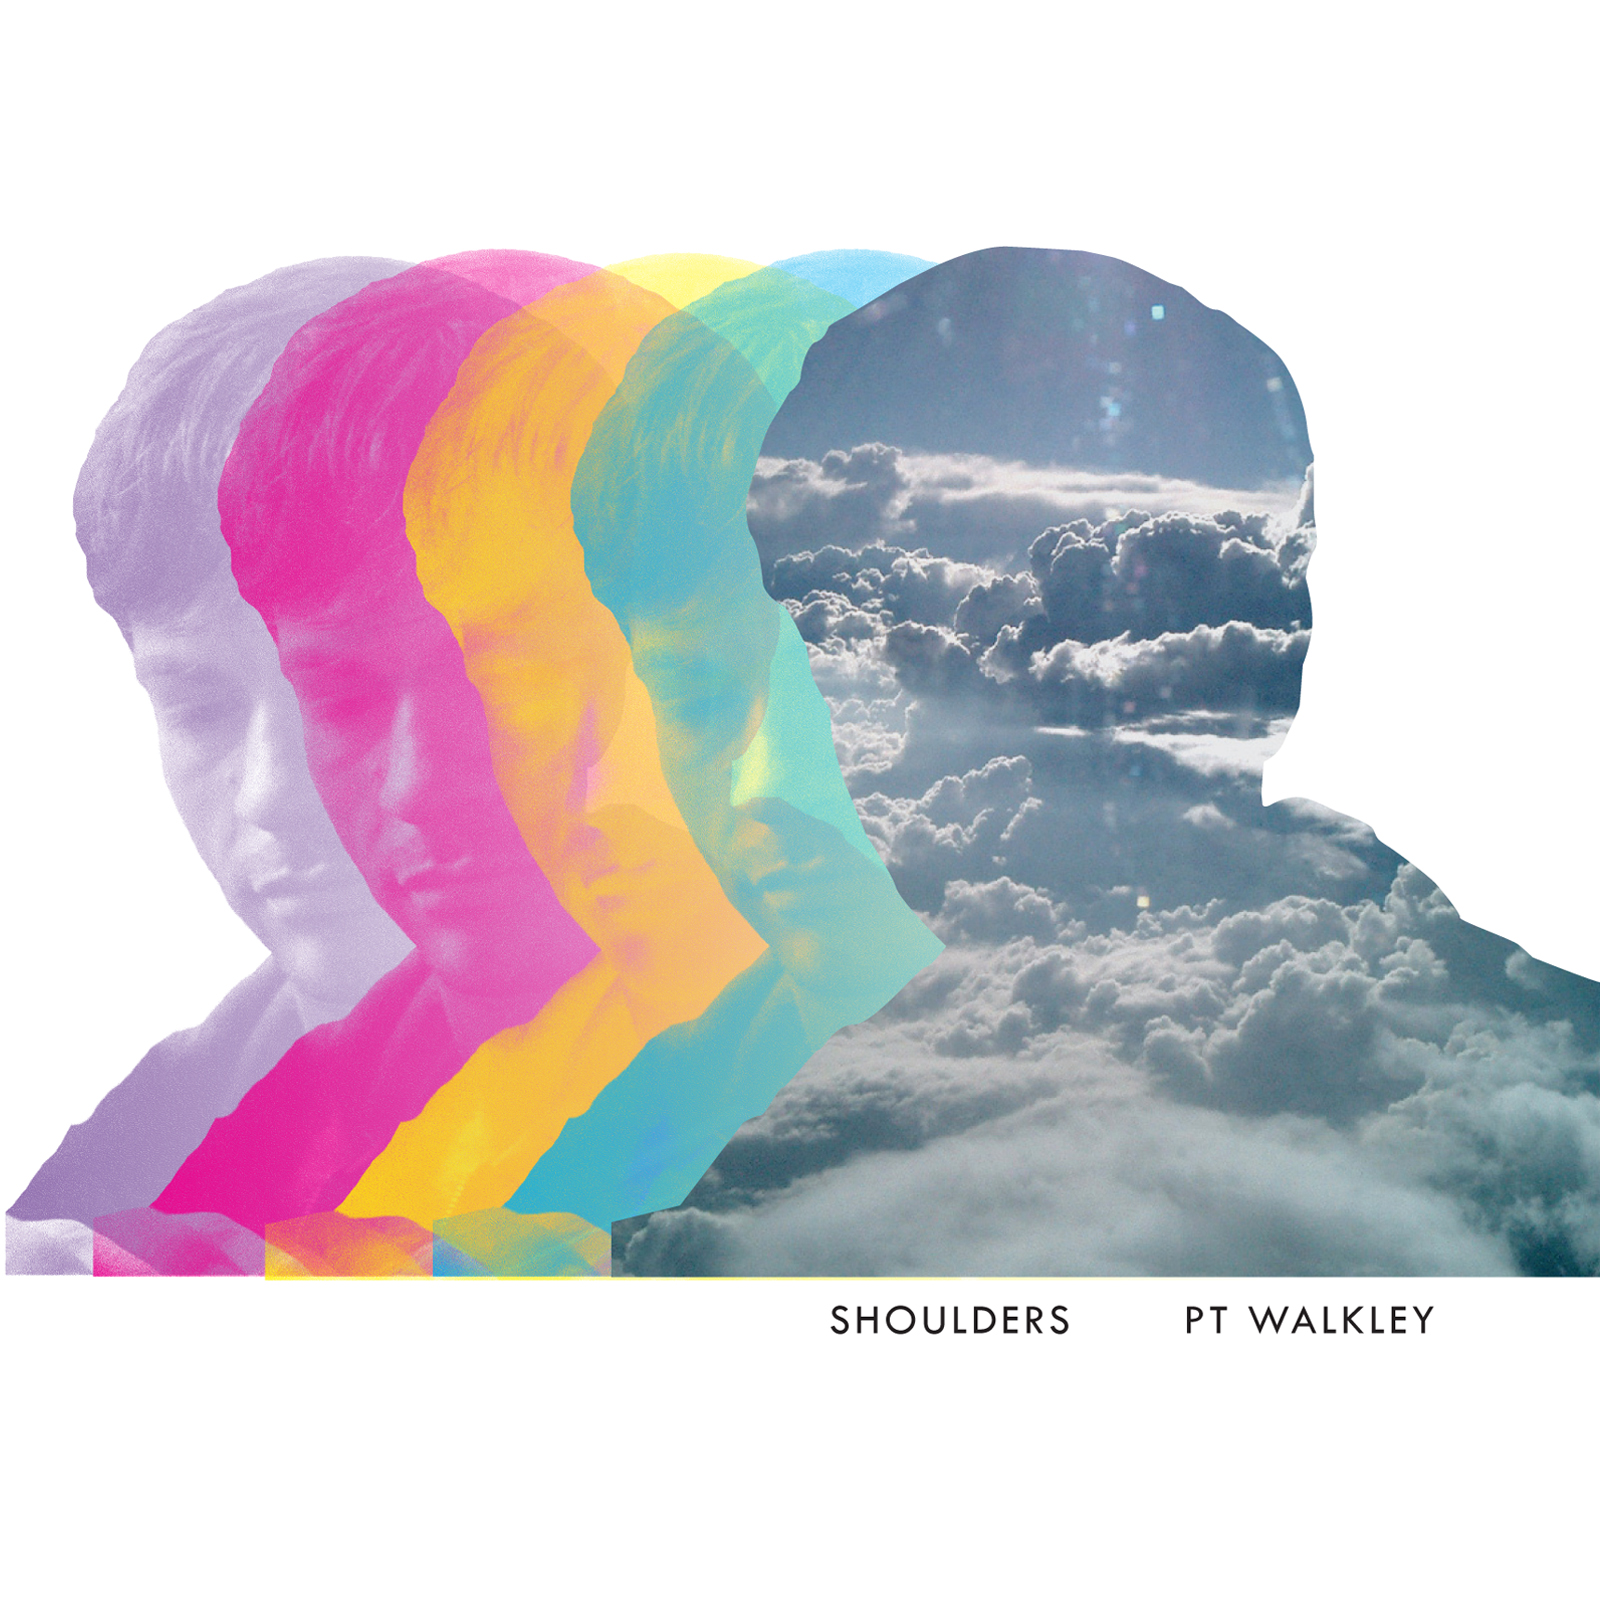 PT Walkley “Lost My Way” Track Premiere